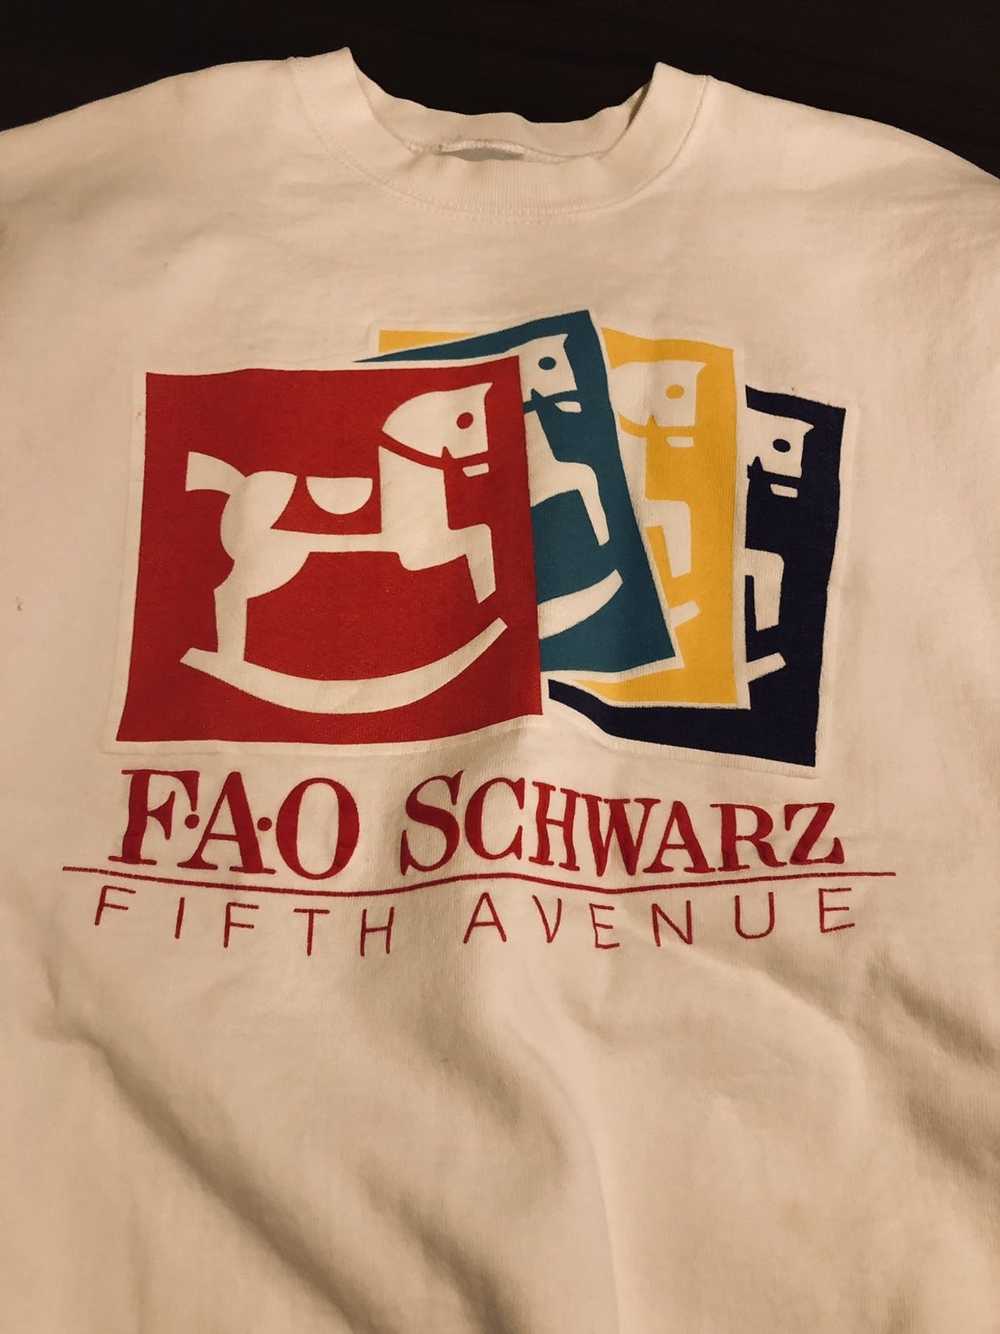 Vintage Vgt 80s 90s FAO Schwarz sweatshirt XL - image 7